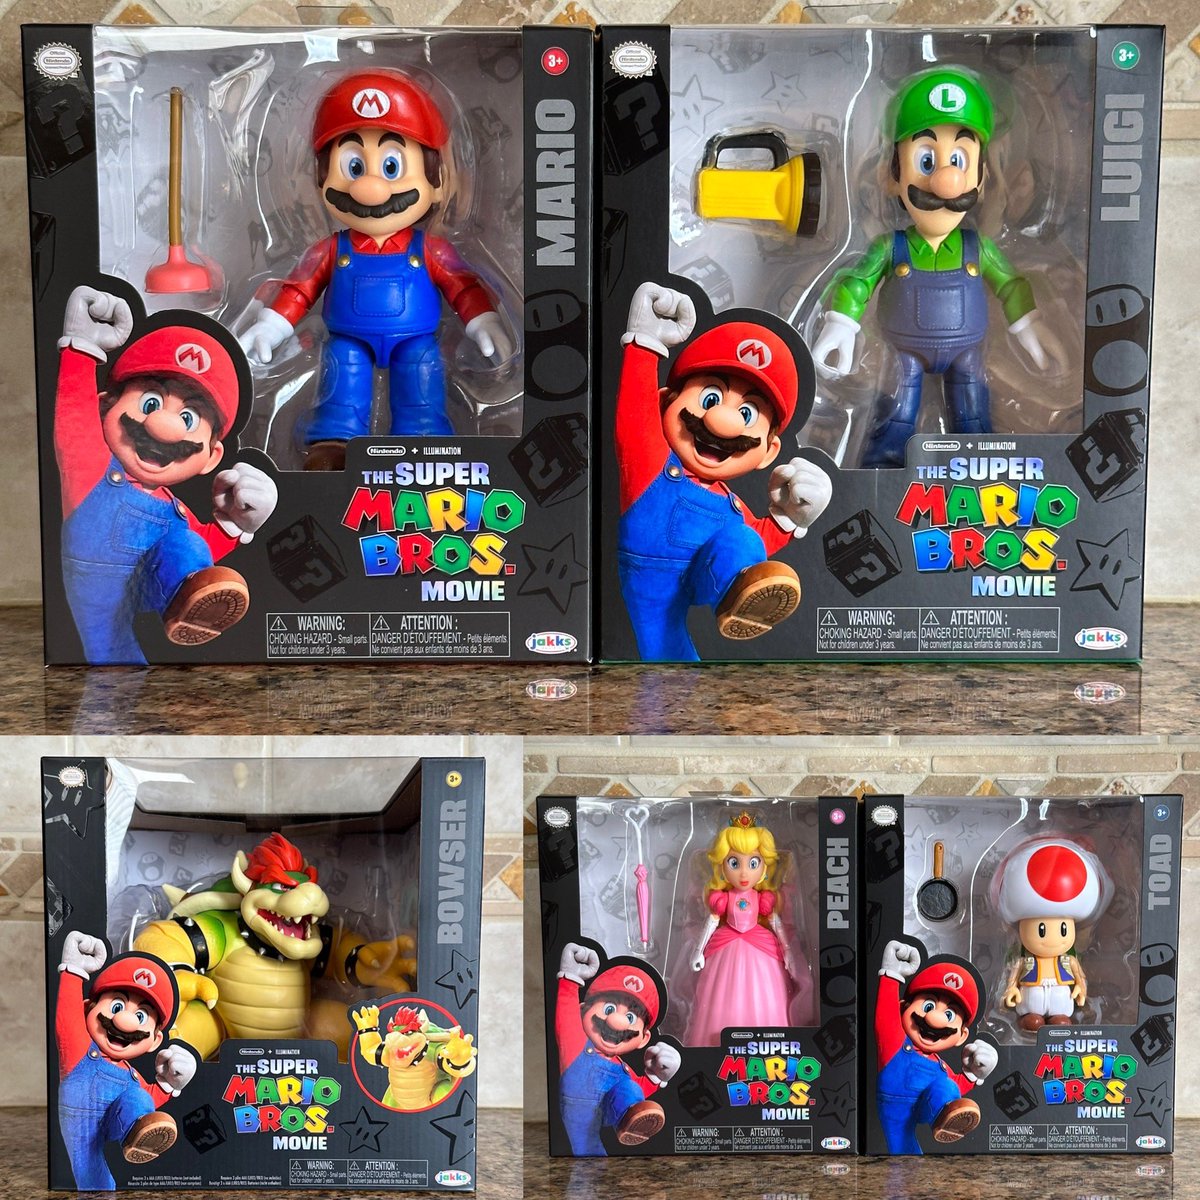 Mail Call! Got my Super Mario Bros. Movie Action Figures!
.
#SuperMarioBros #SuperMarioBrosMovie #Nintendo #JakksPacific #JakksToys #Jakks #Collectibles #DisTrackers